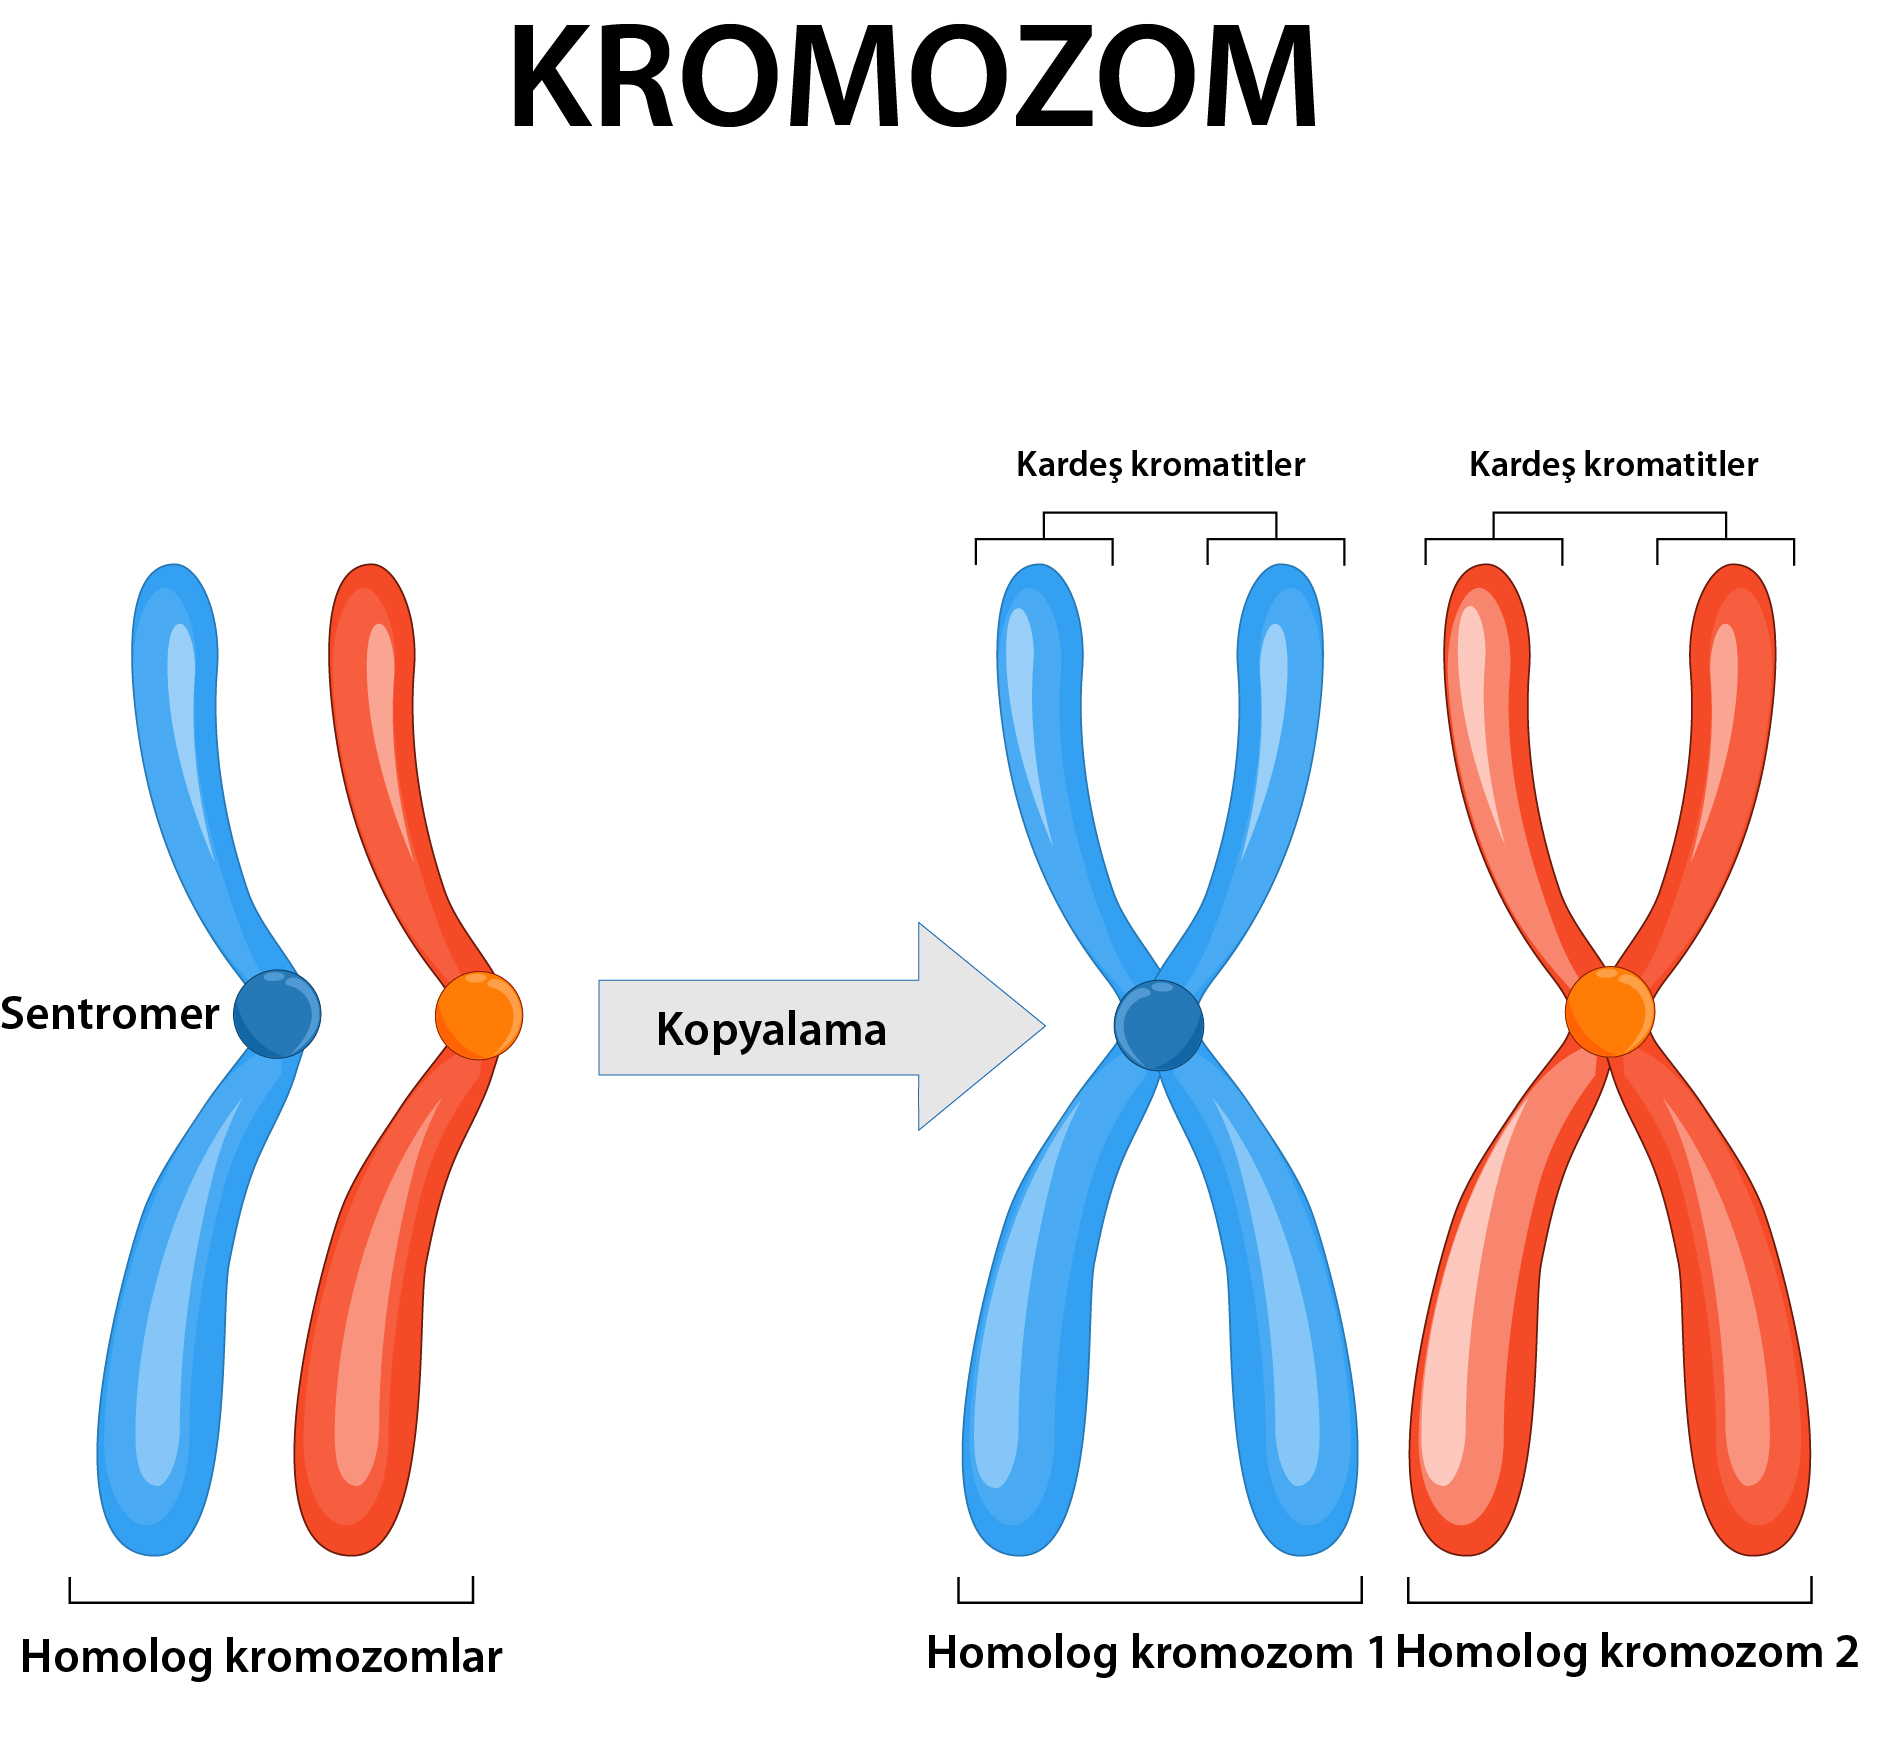 Homolog kromozomlar